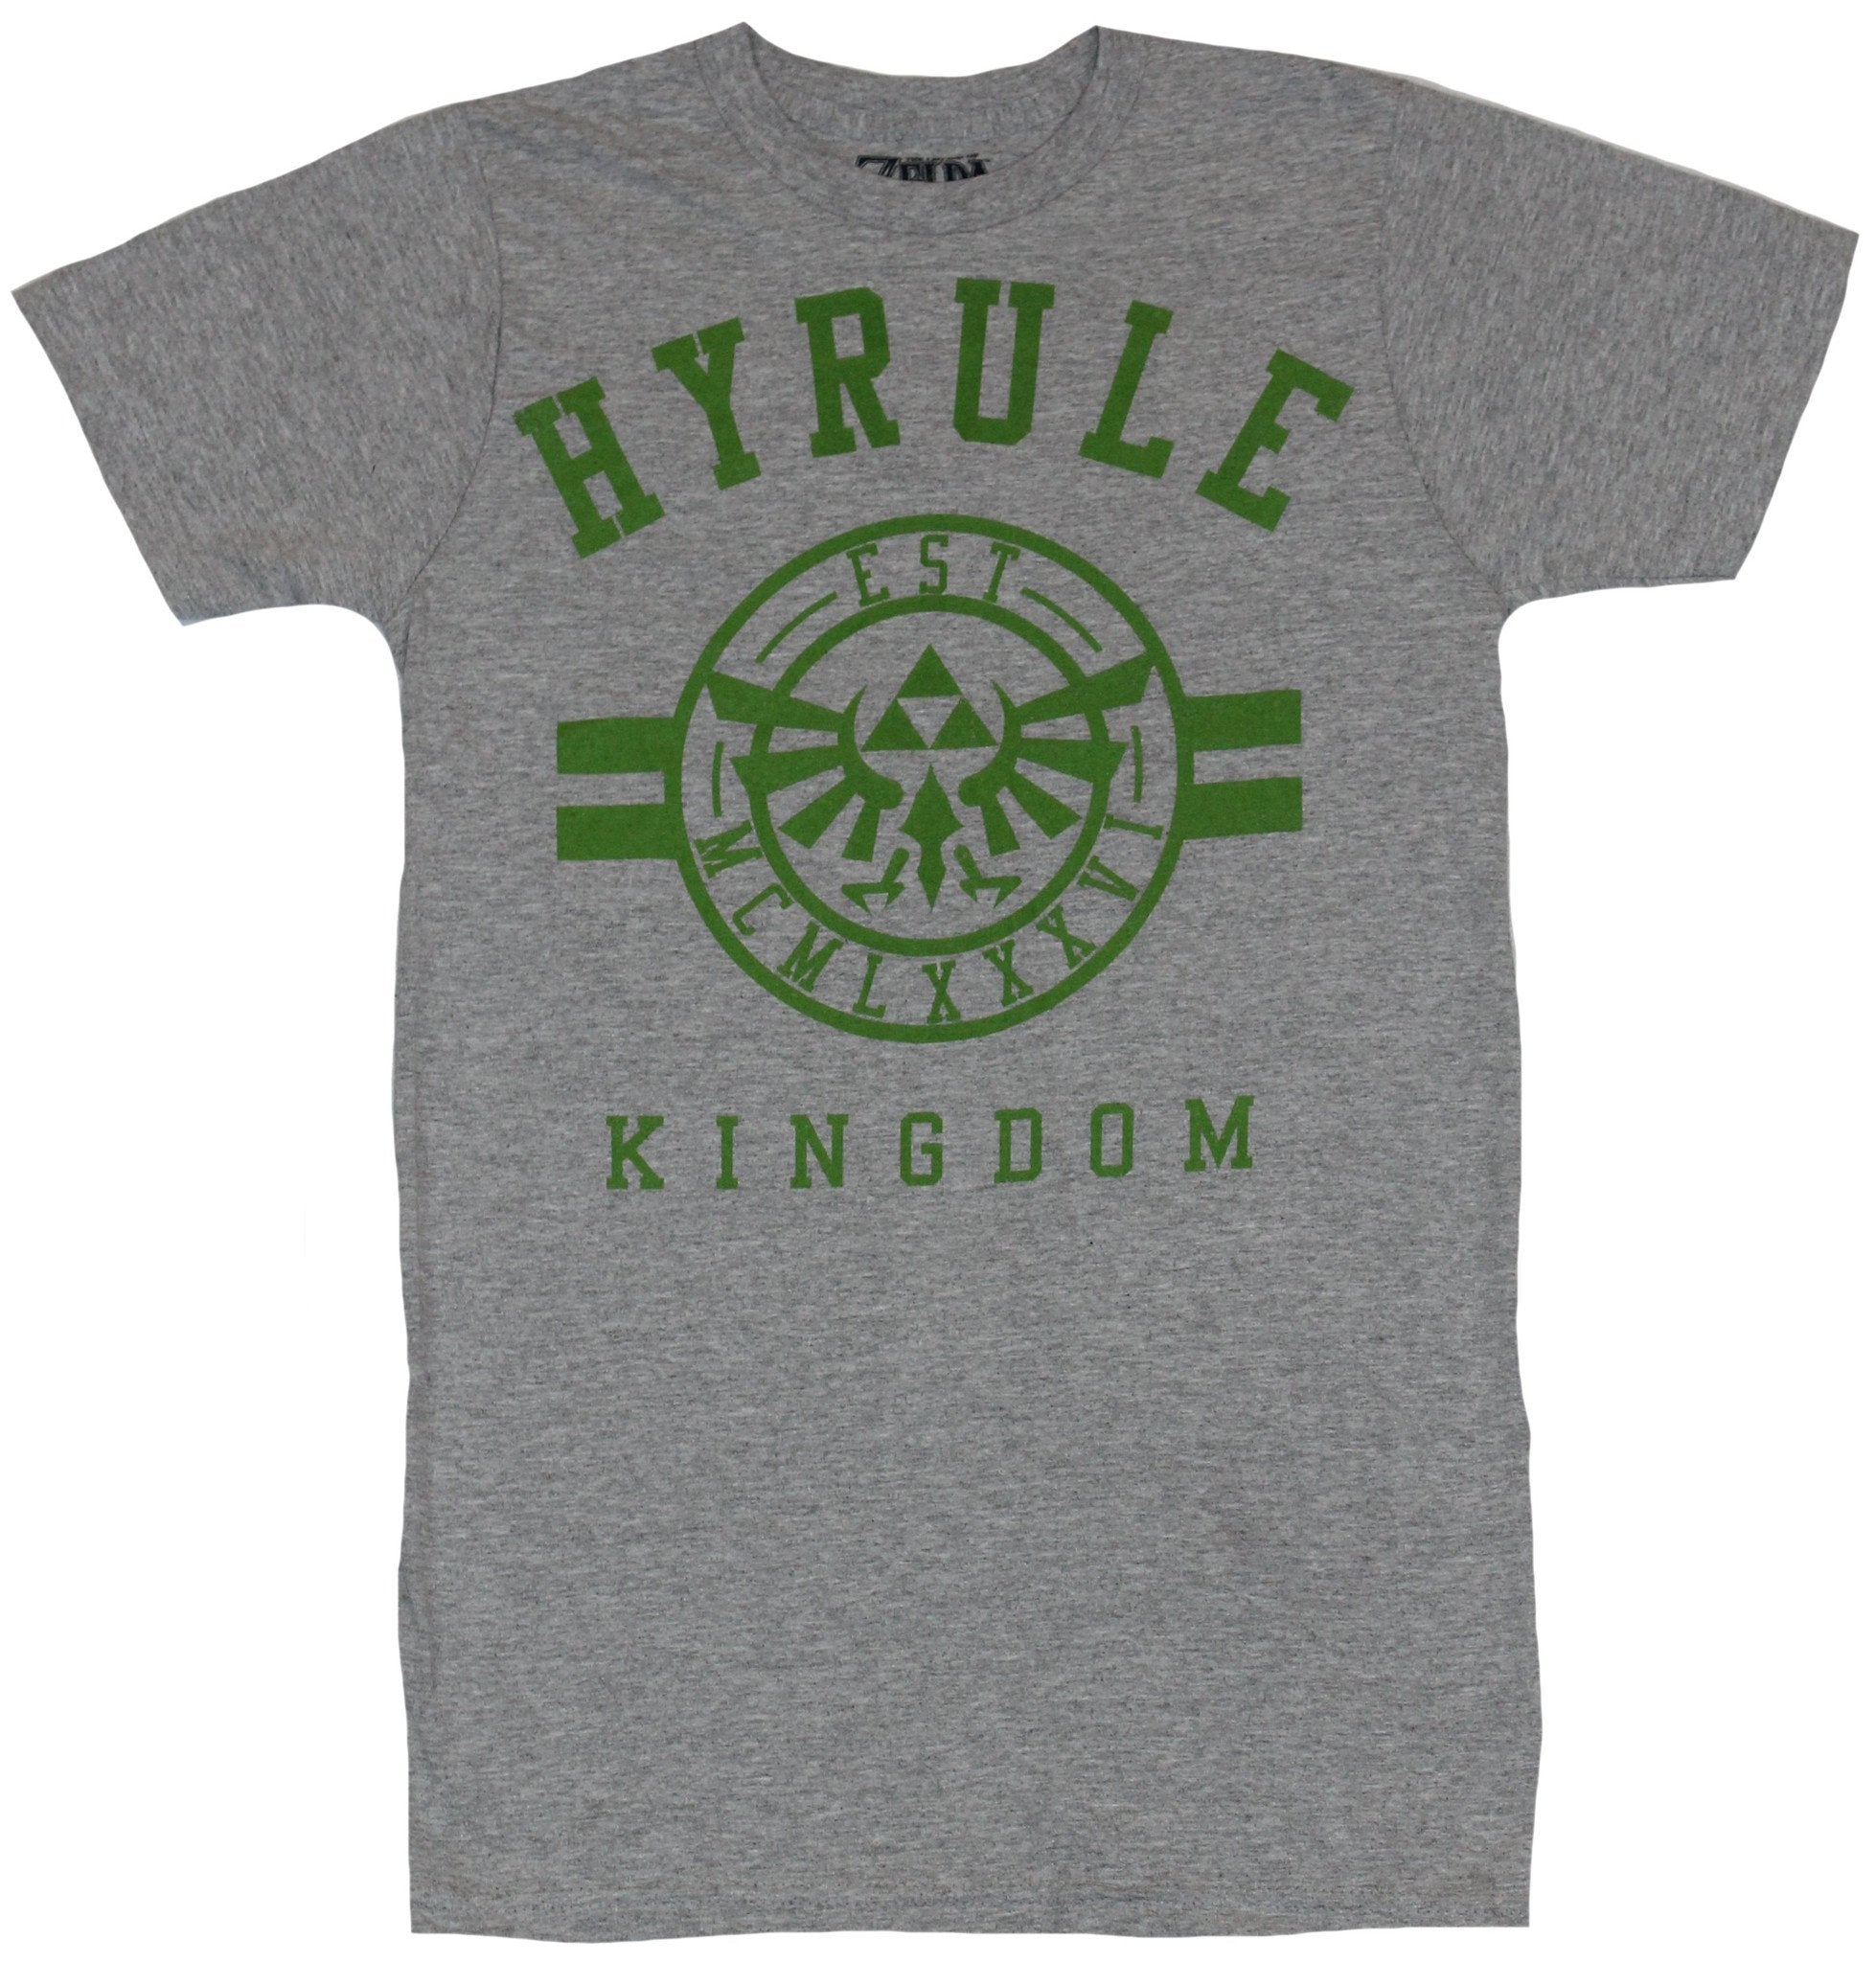 Legend of Zelda Mens T-Shirt - Hyrule Kingdom University Style Logo Image